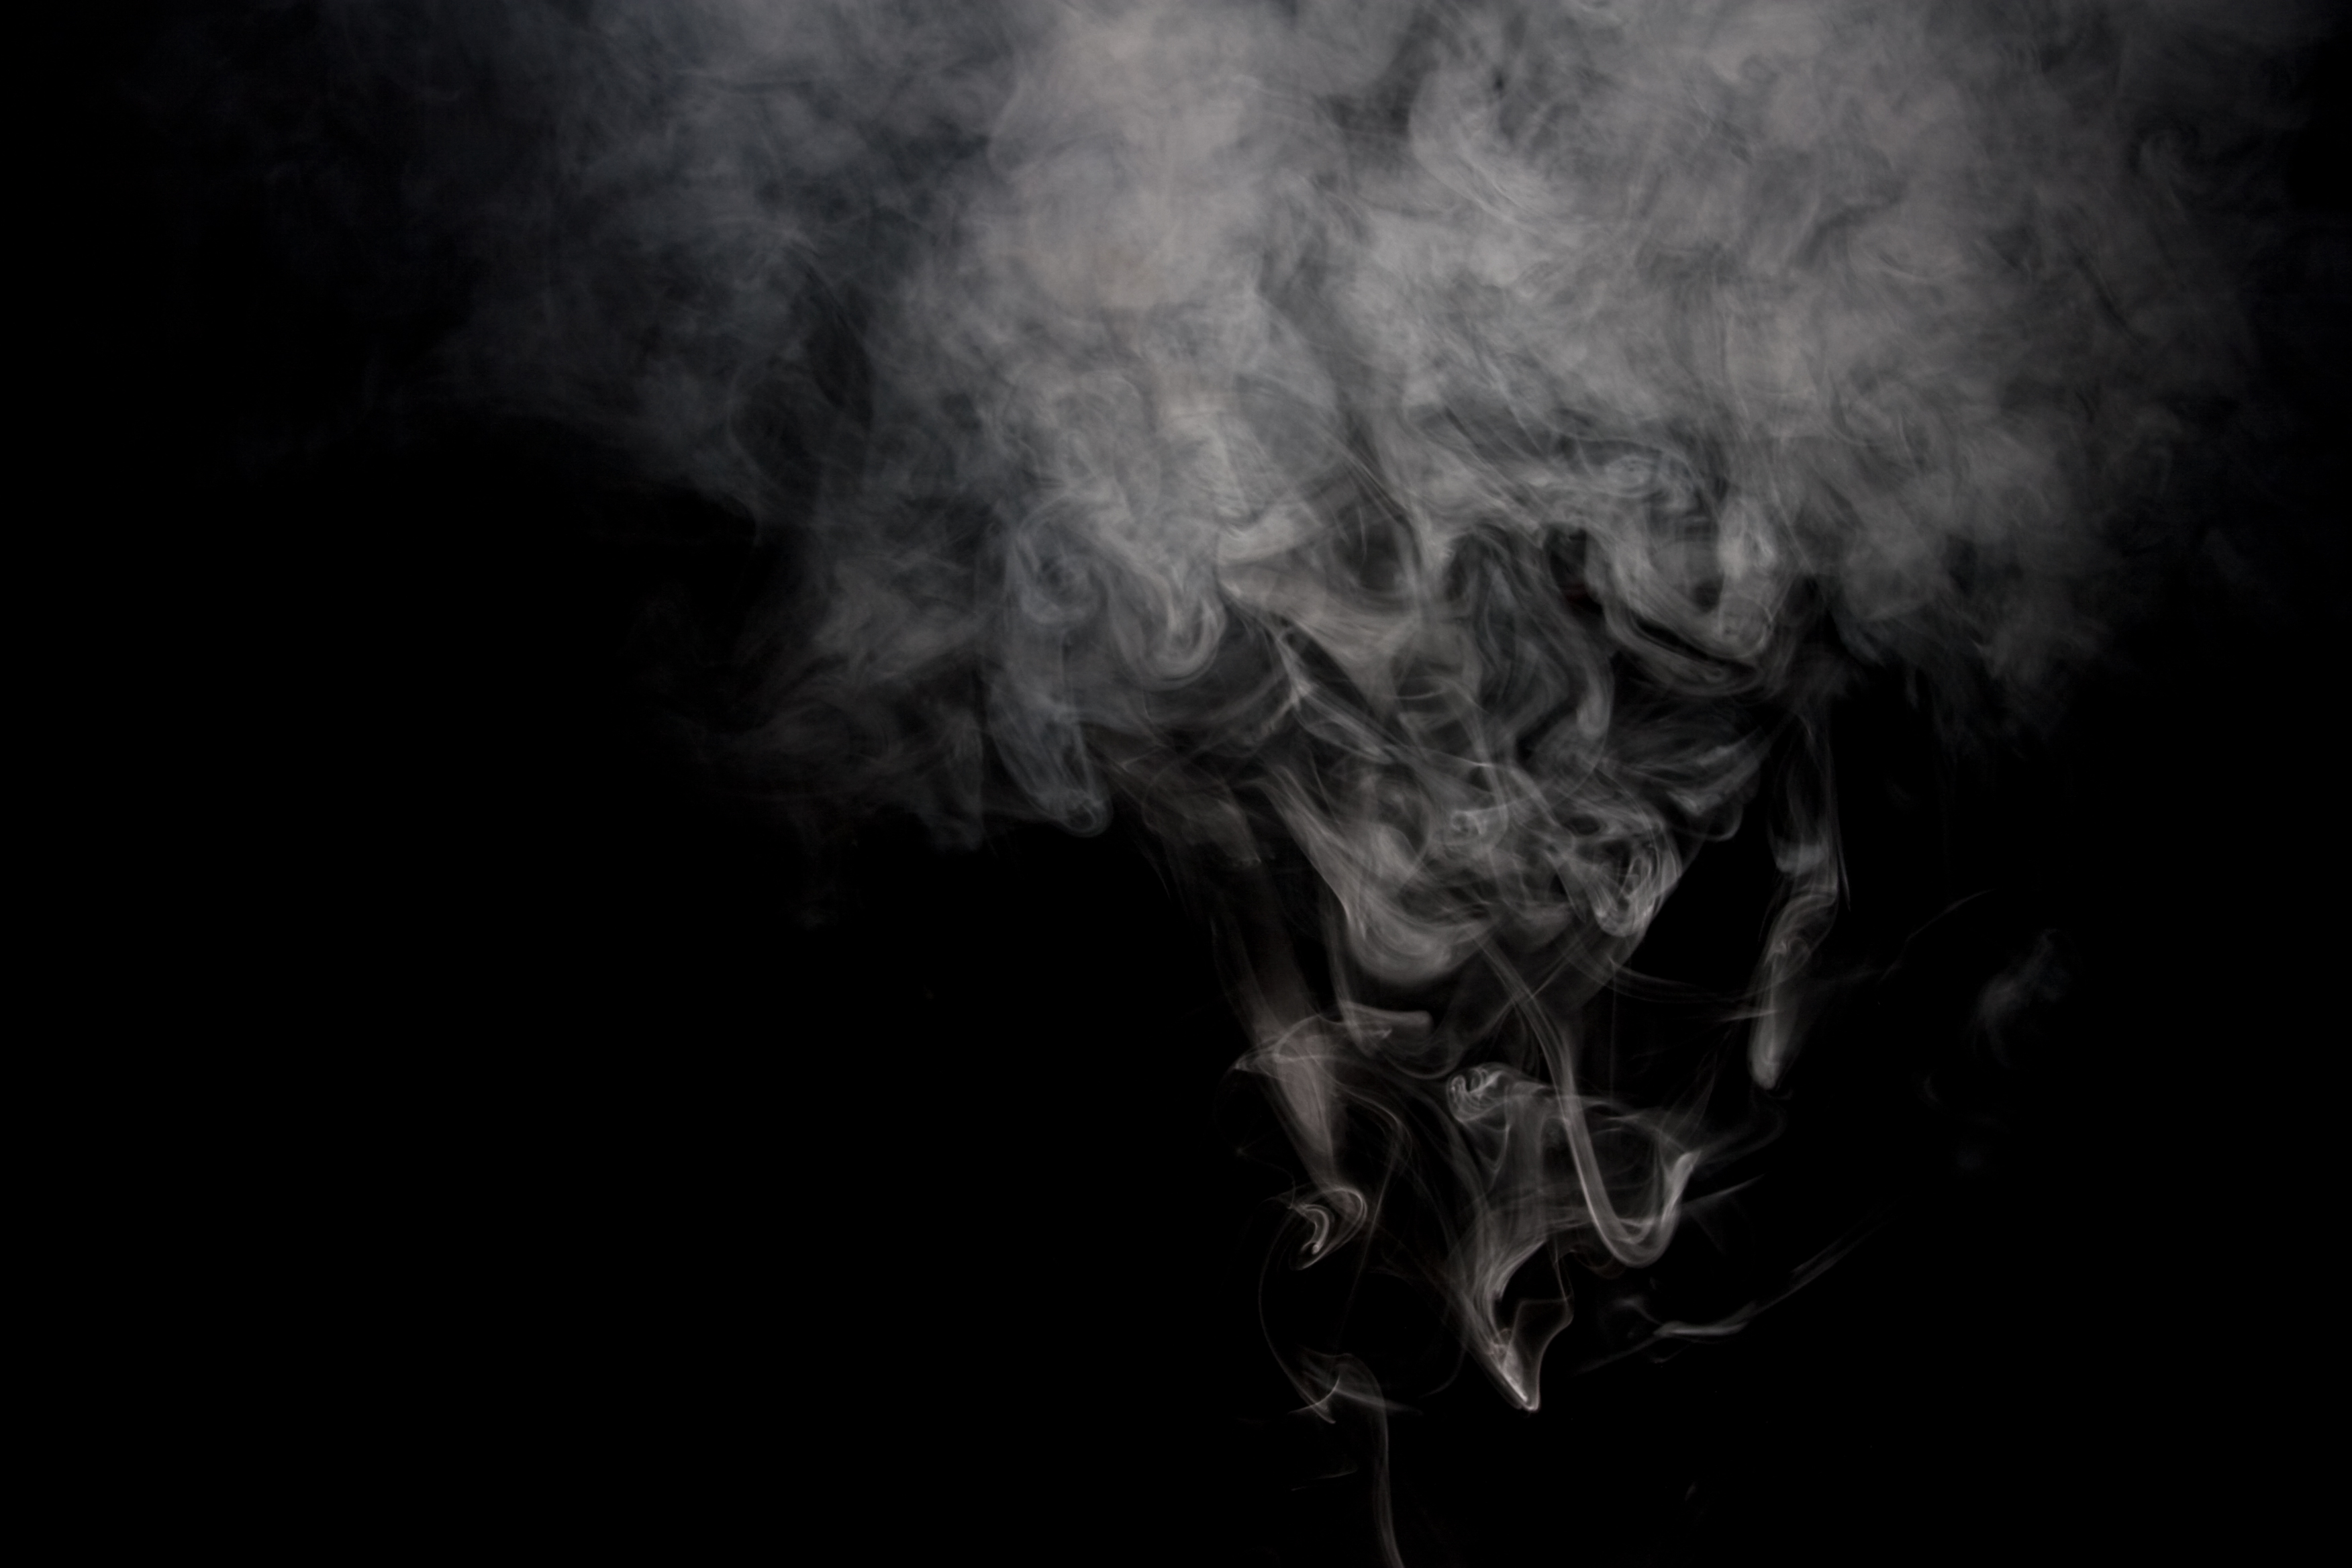 Smoke on black photo